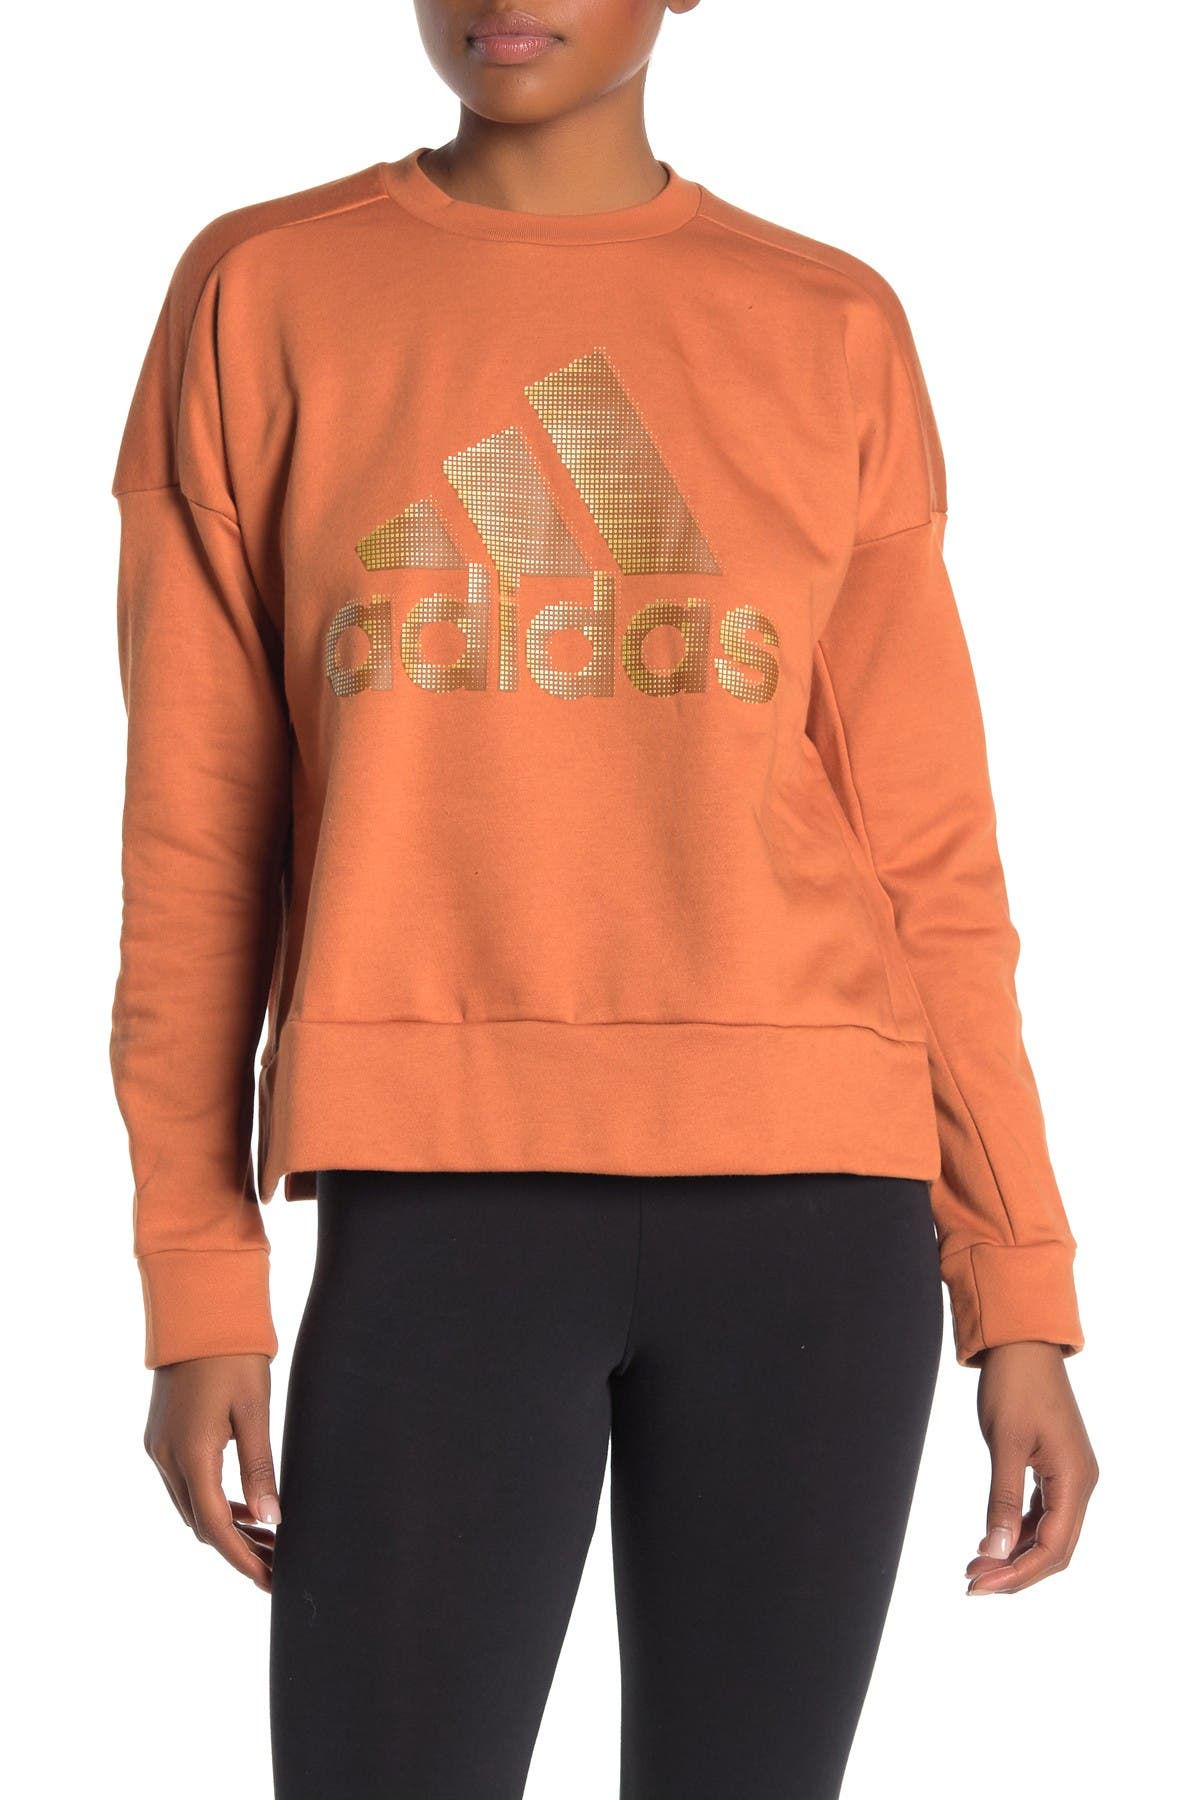 adidas id glam sweatshirt